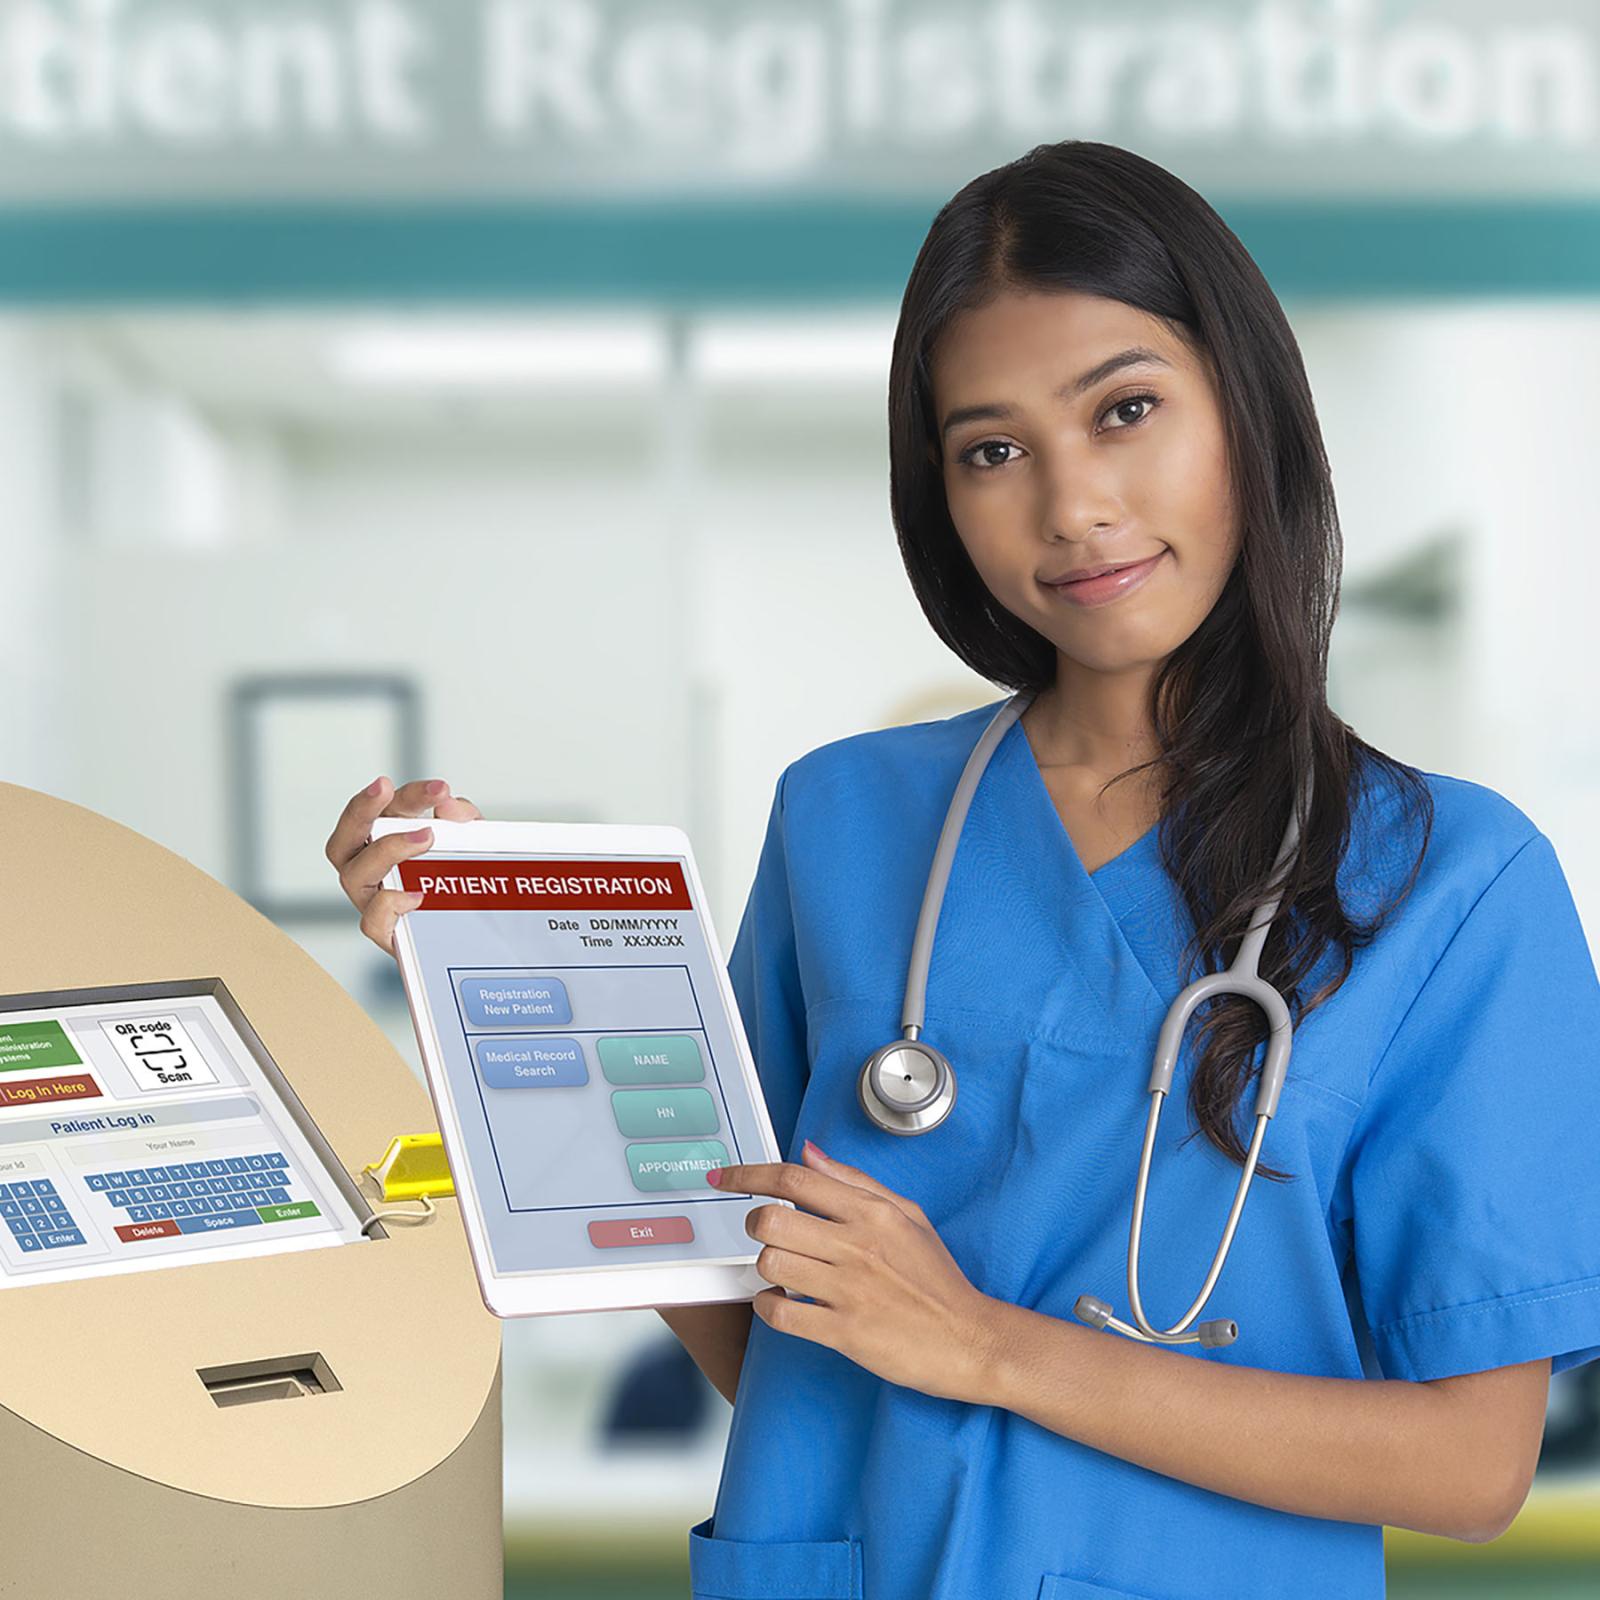 Nurse using technology for health data